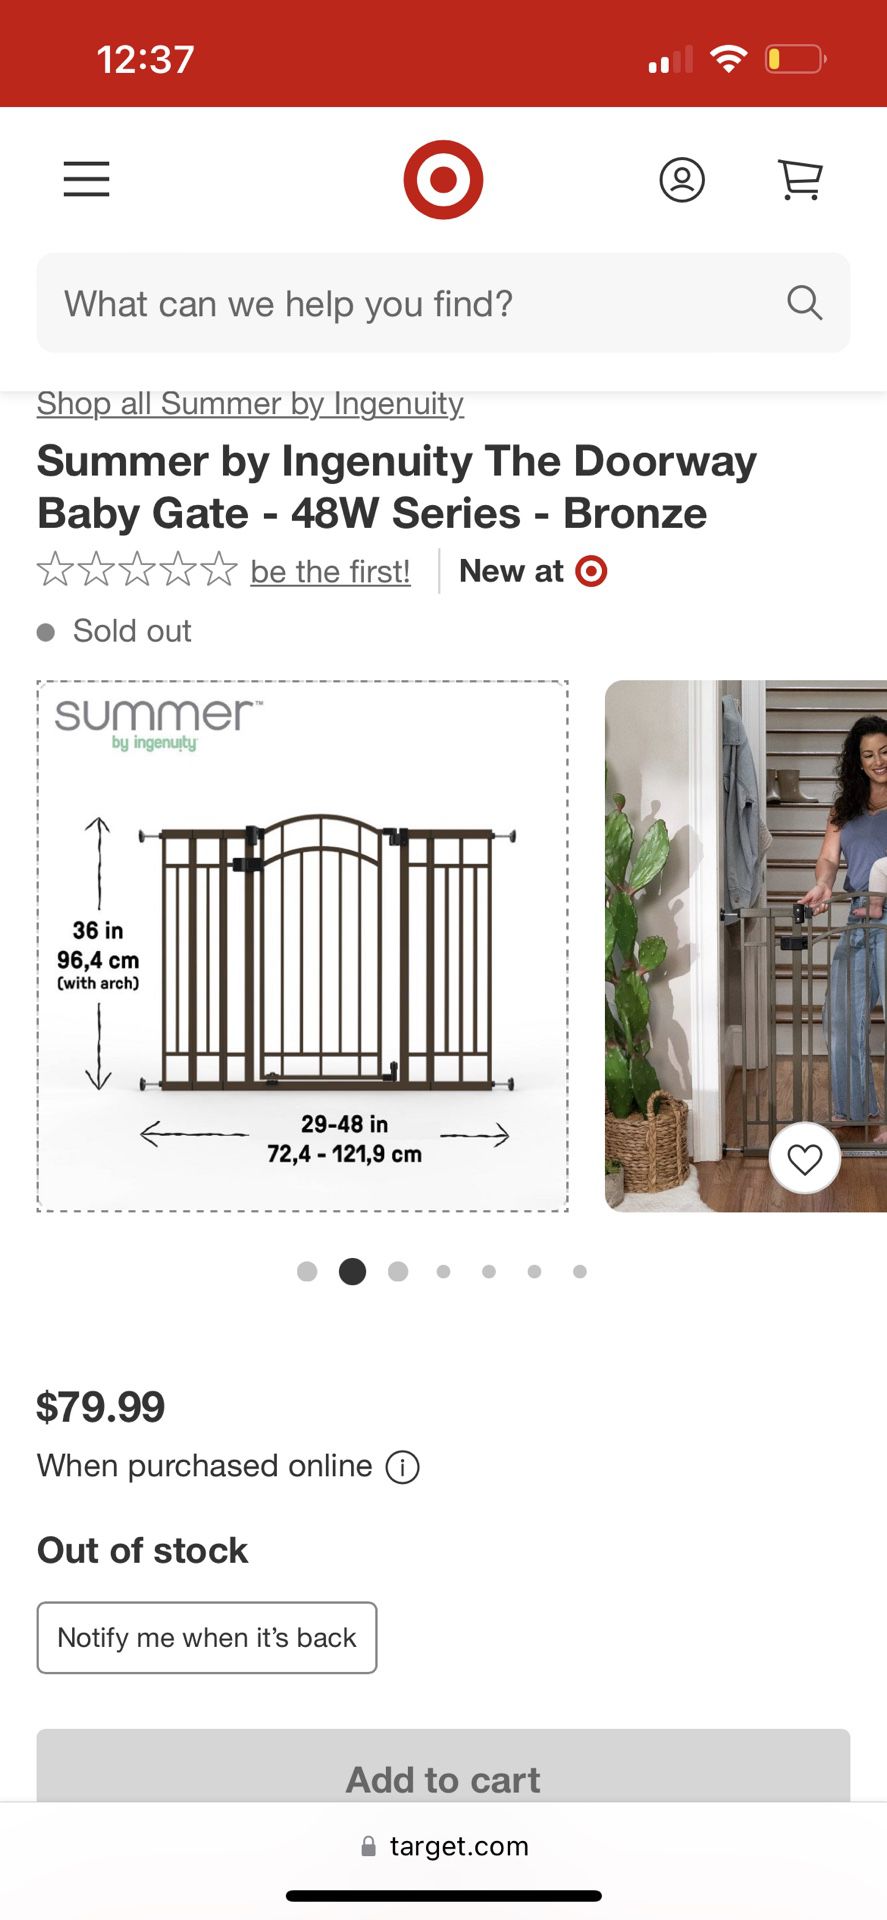 Pet / Baby Gate — Summer by Ingenuity The Doorway Baby Gate - 48W Series - Bronze